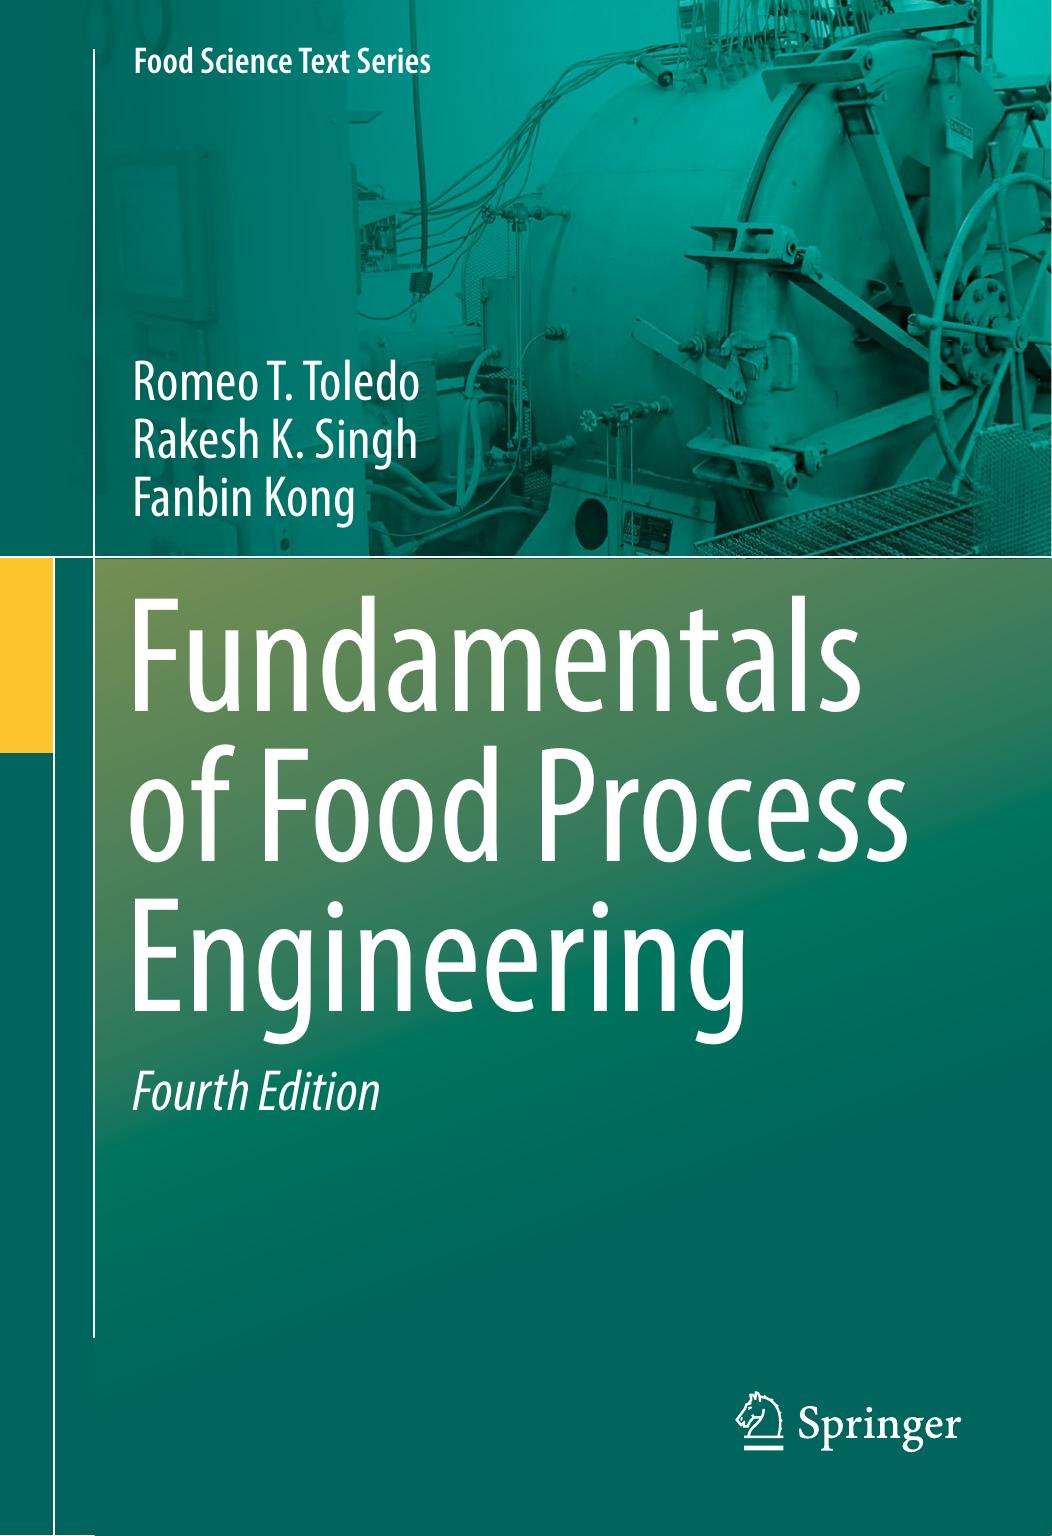 Fundamentals of Food Process Engineering-Springer (2018)